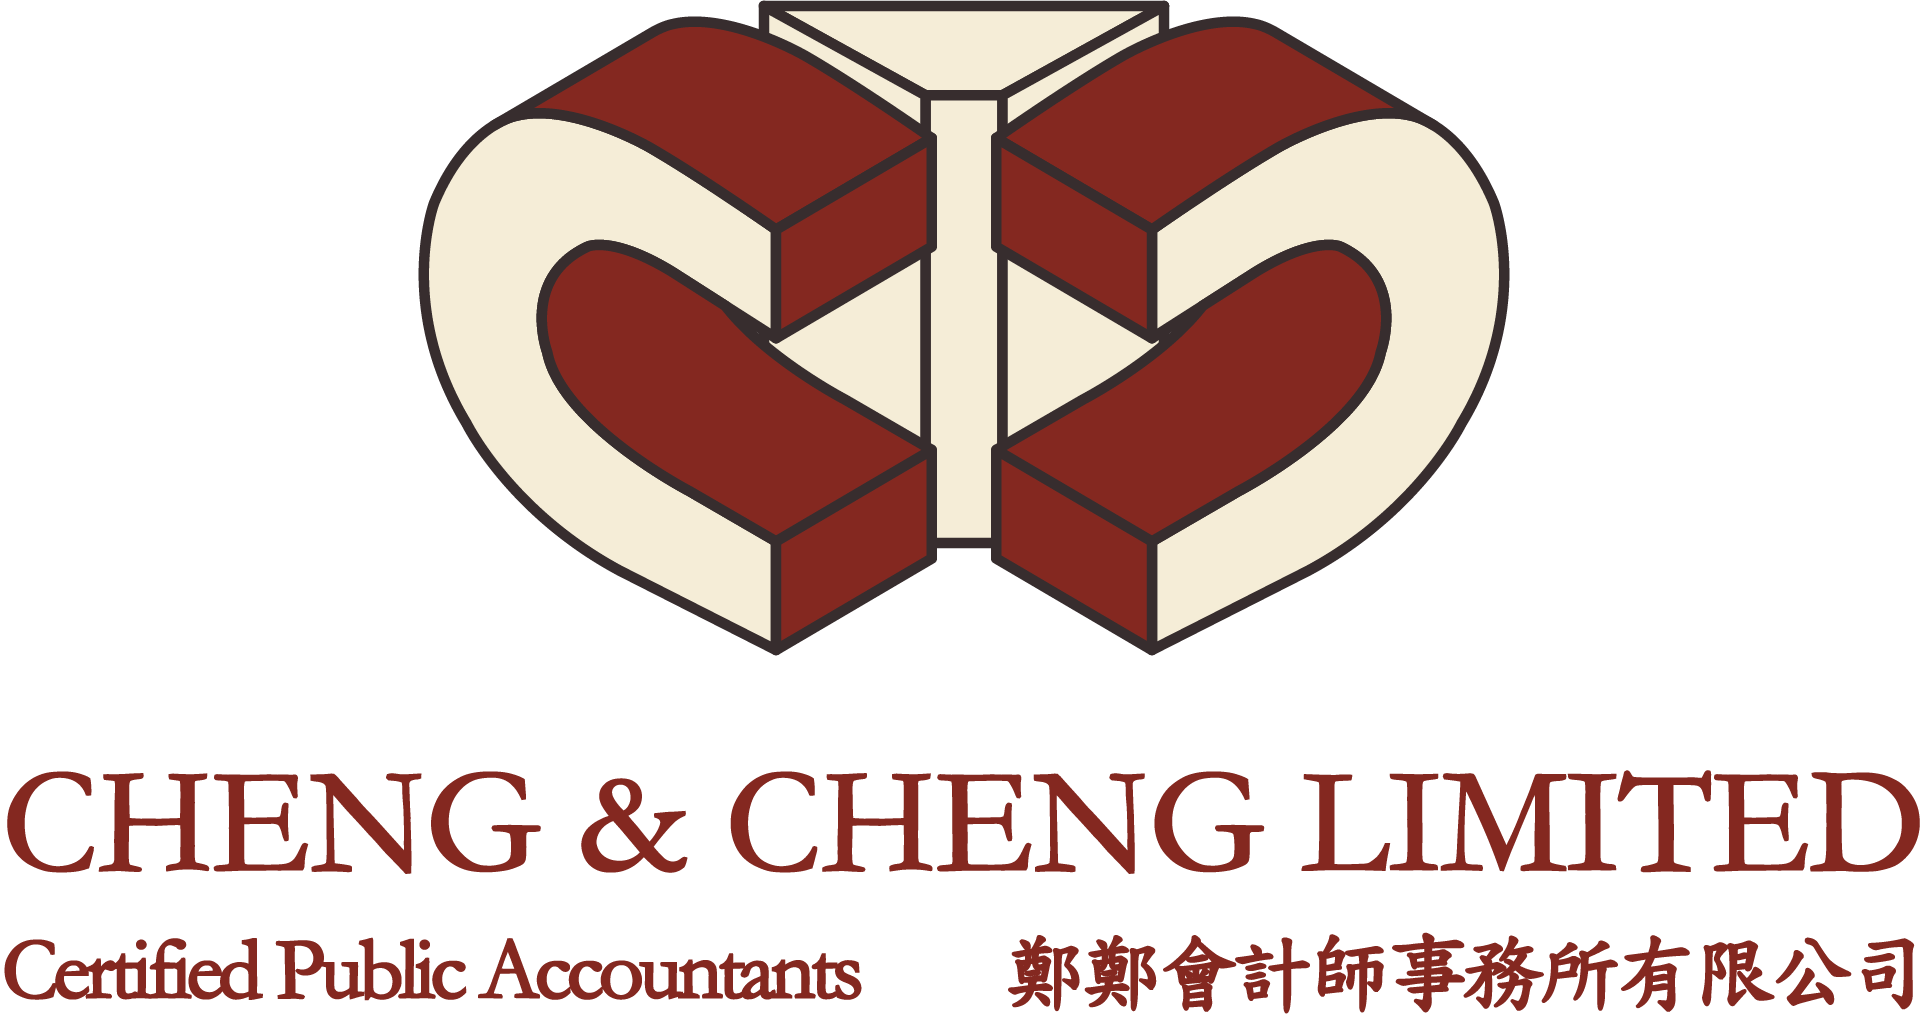 Cheng & Cheng Limited